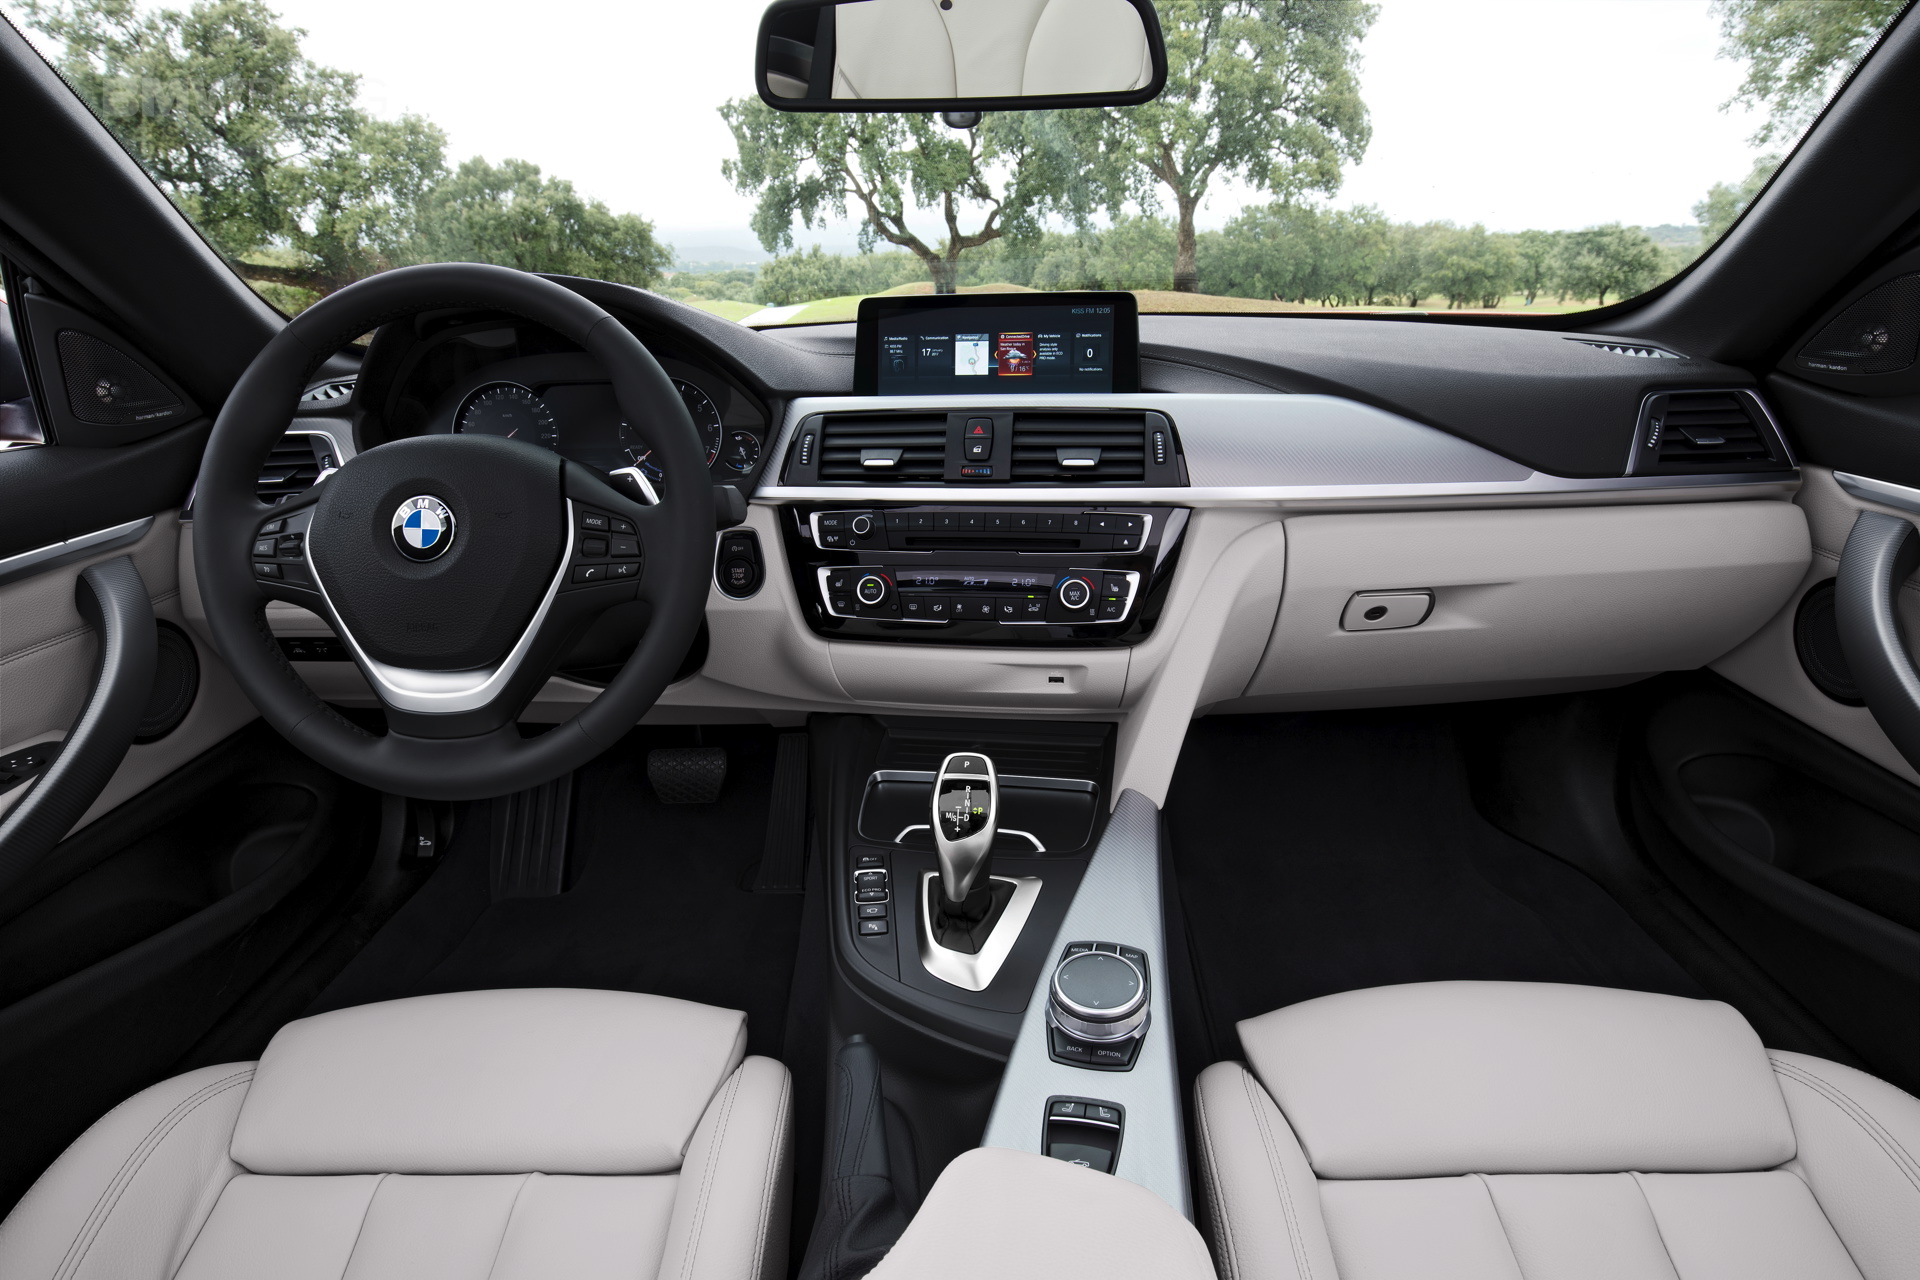 2017-BMW-4-Series-interior-01.jpg